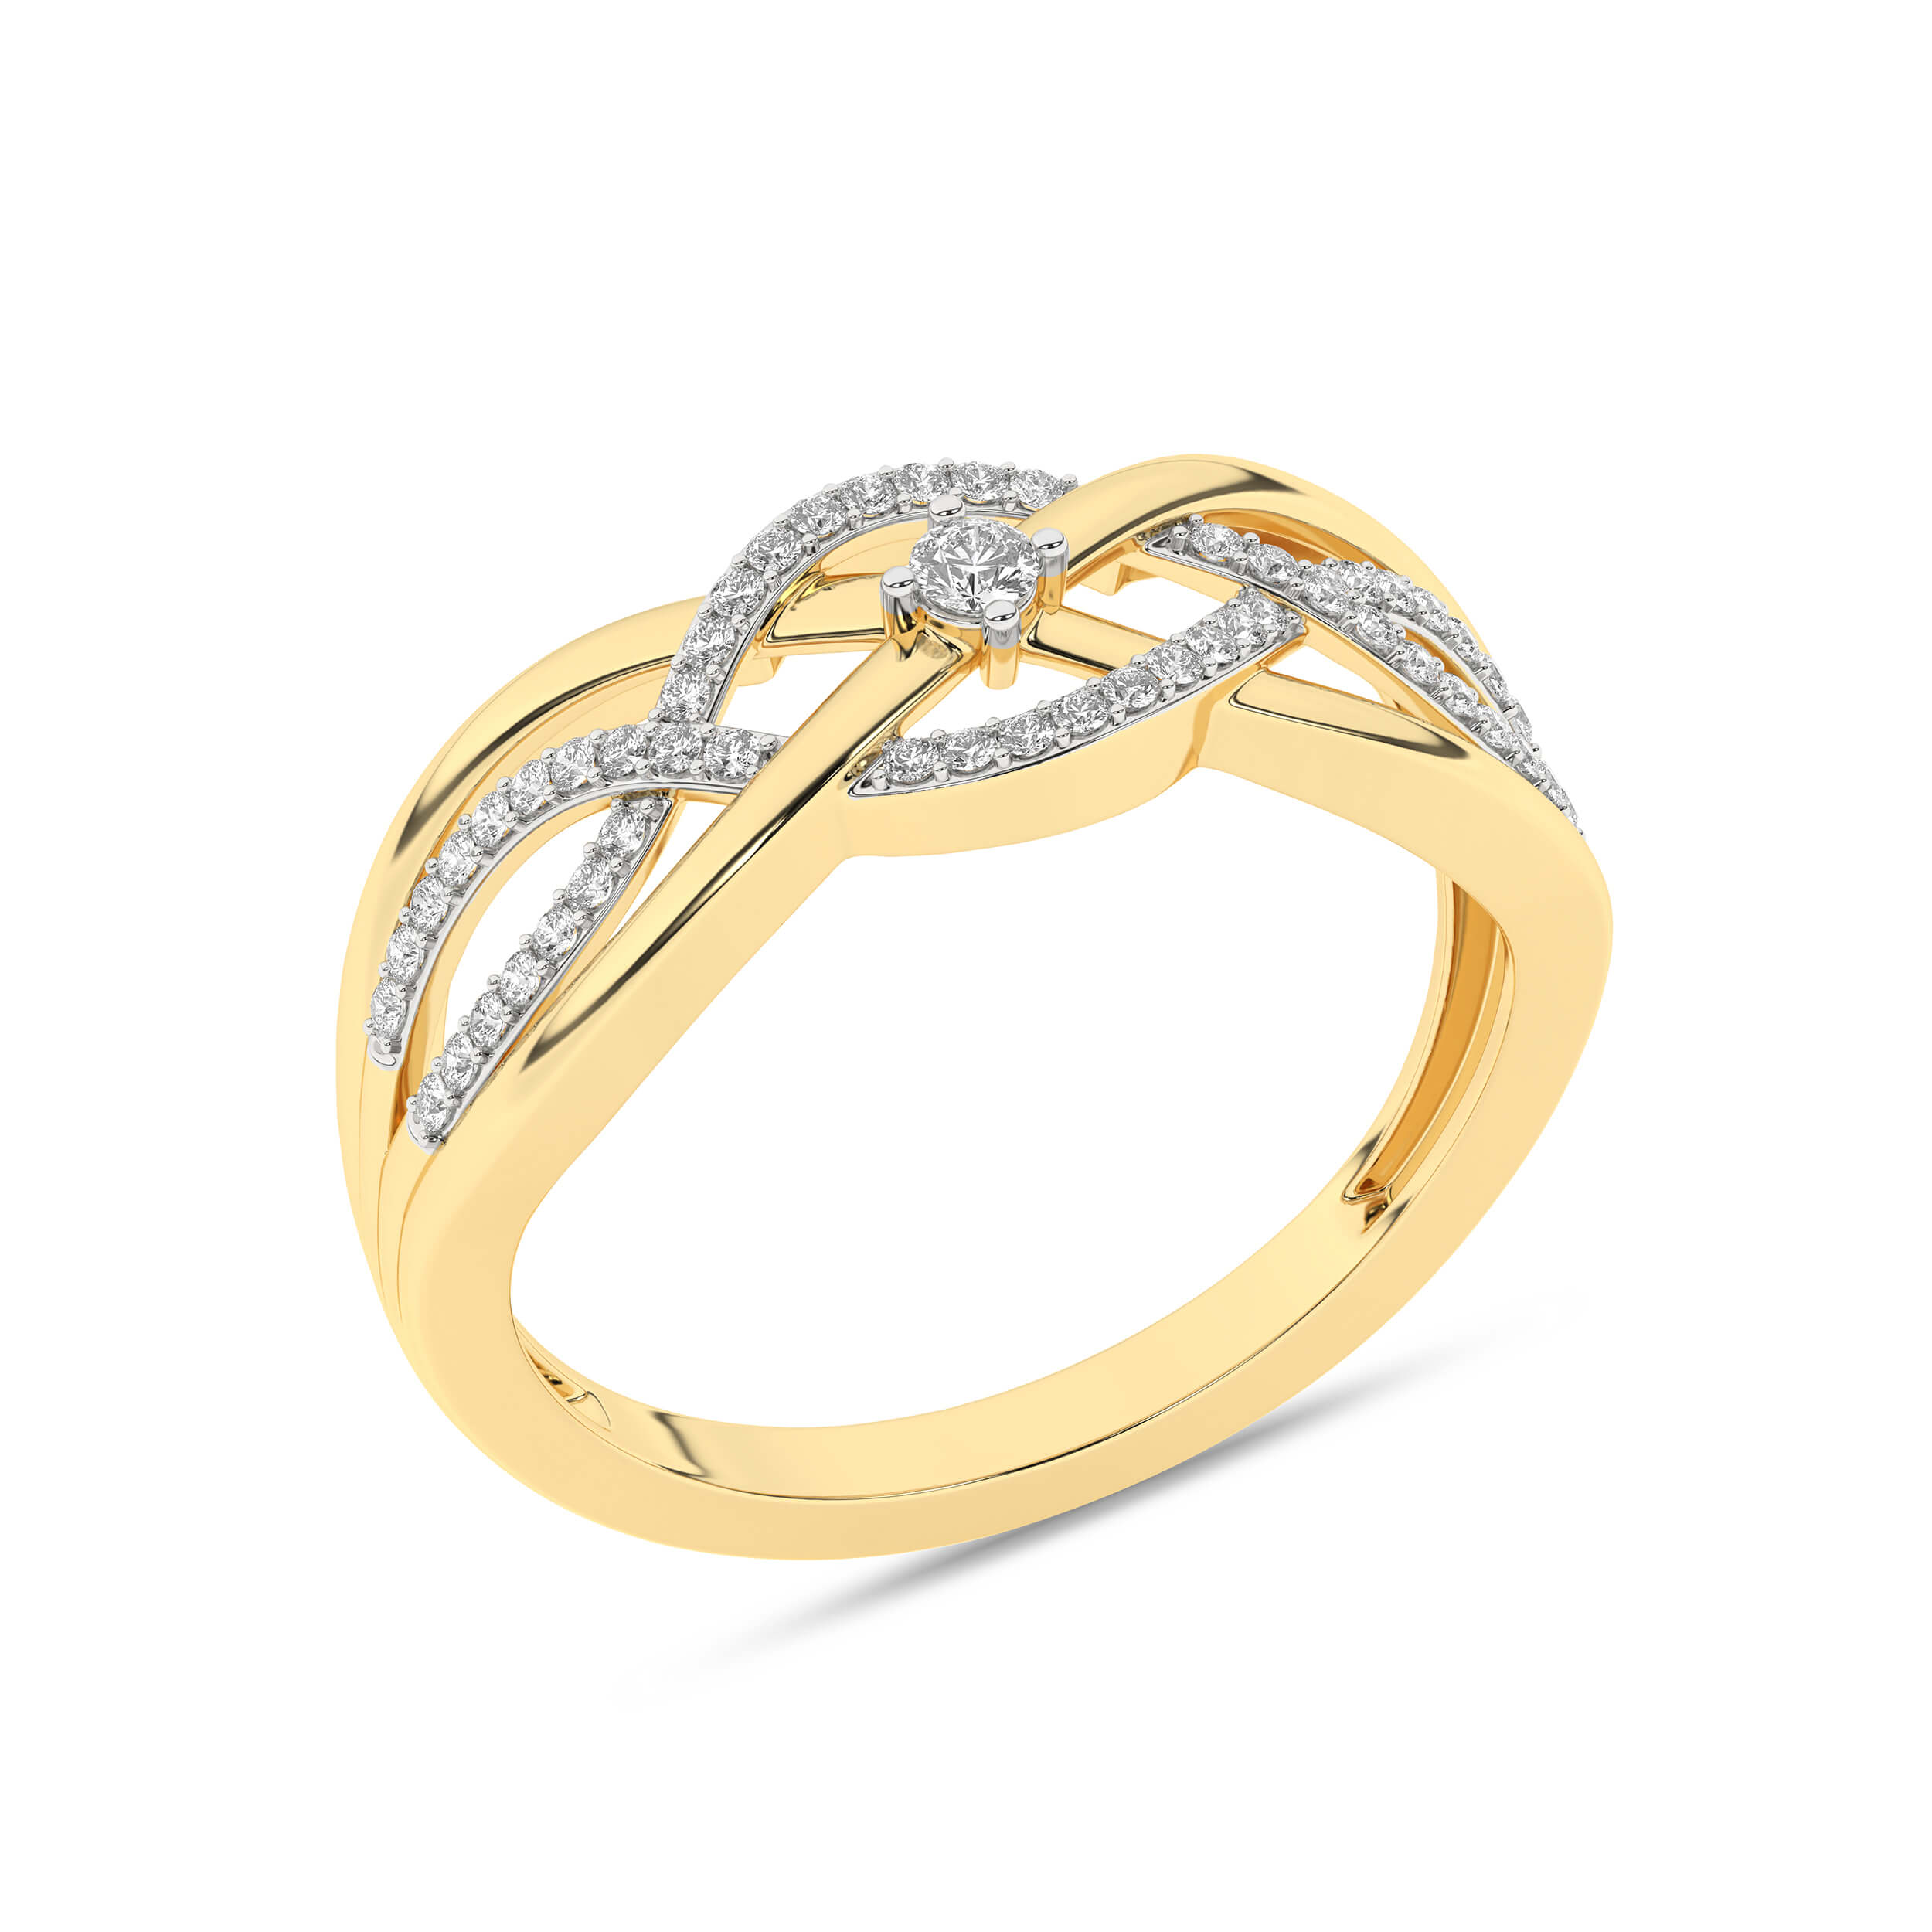 Inel din Aur Galben 14K cu Diamante 0.15Ct, articol RF18151, previzualizare foto 4